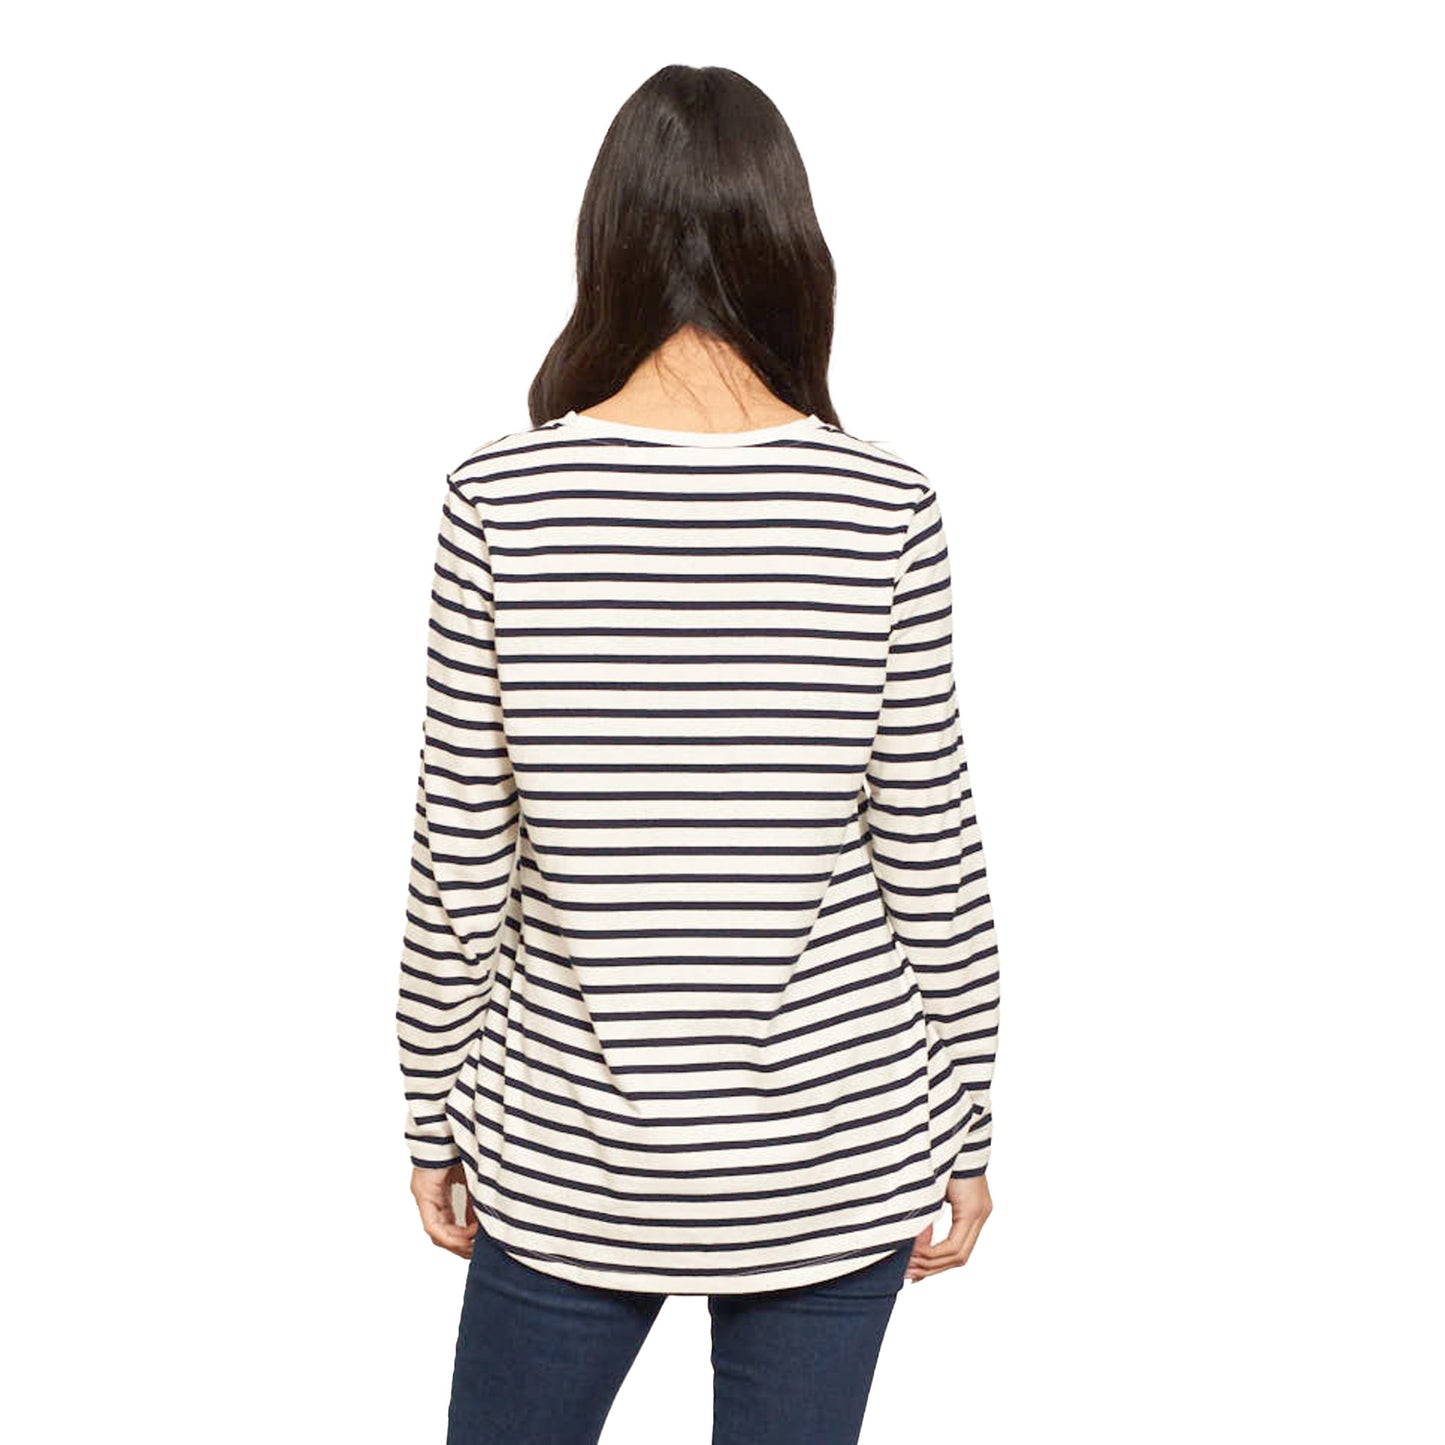 Sydney Long Sleeve Top - Blue & White Stripe